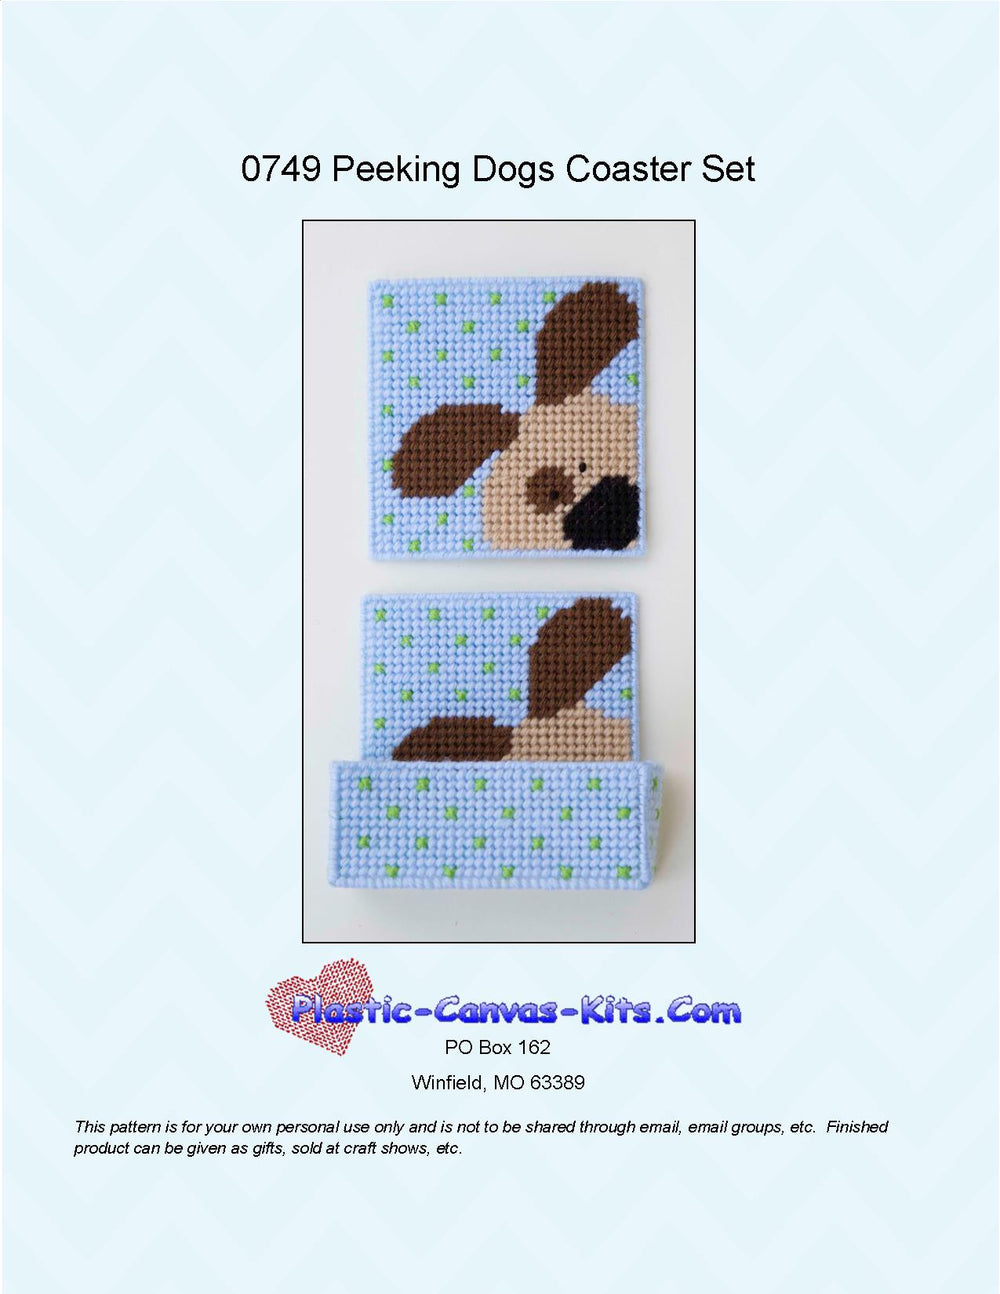 Peeking Dogs Coaster Set